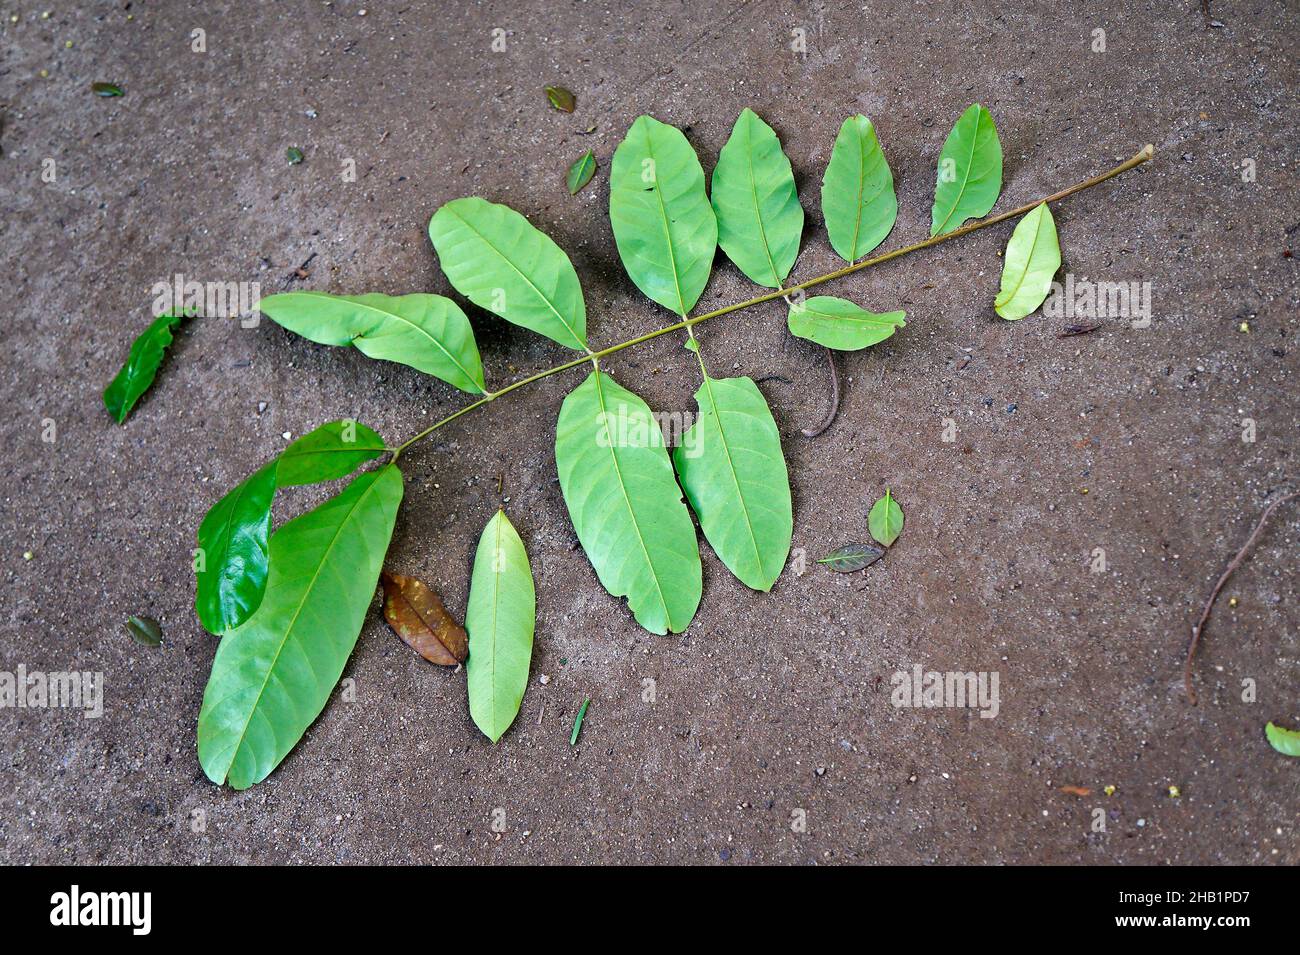 Crabwood tree leaf or Andiroba leaf (Carapa guianensis), Brazil Stock Photo